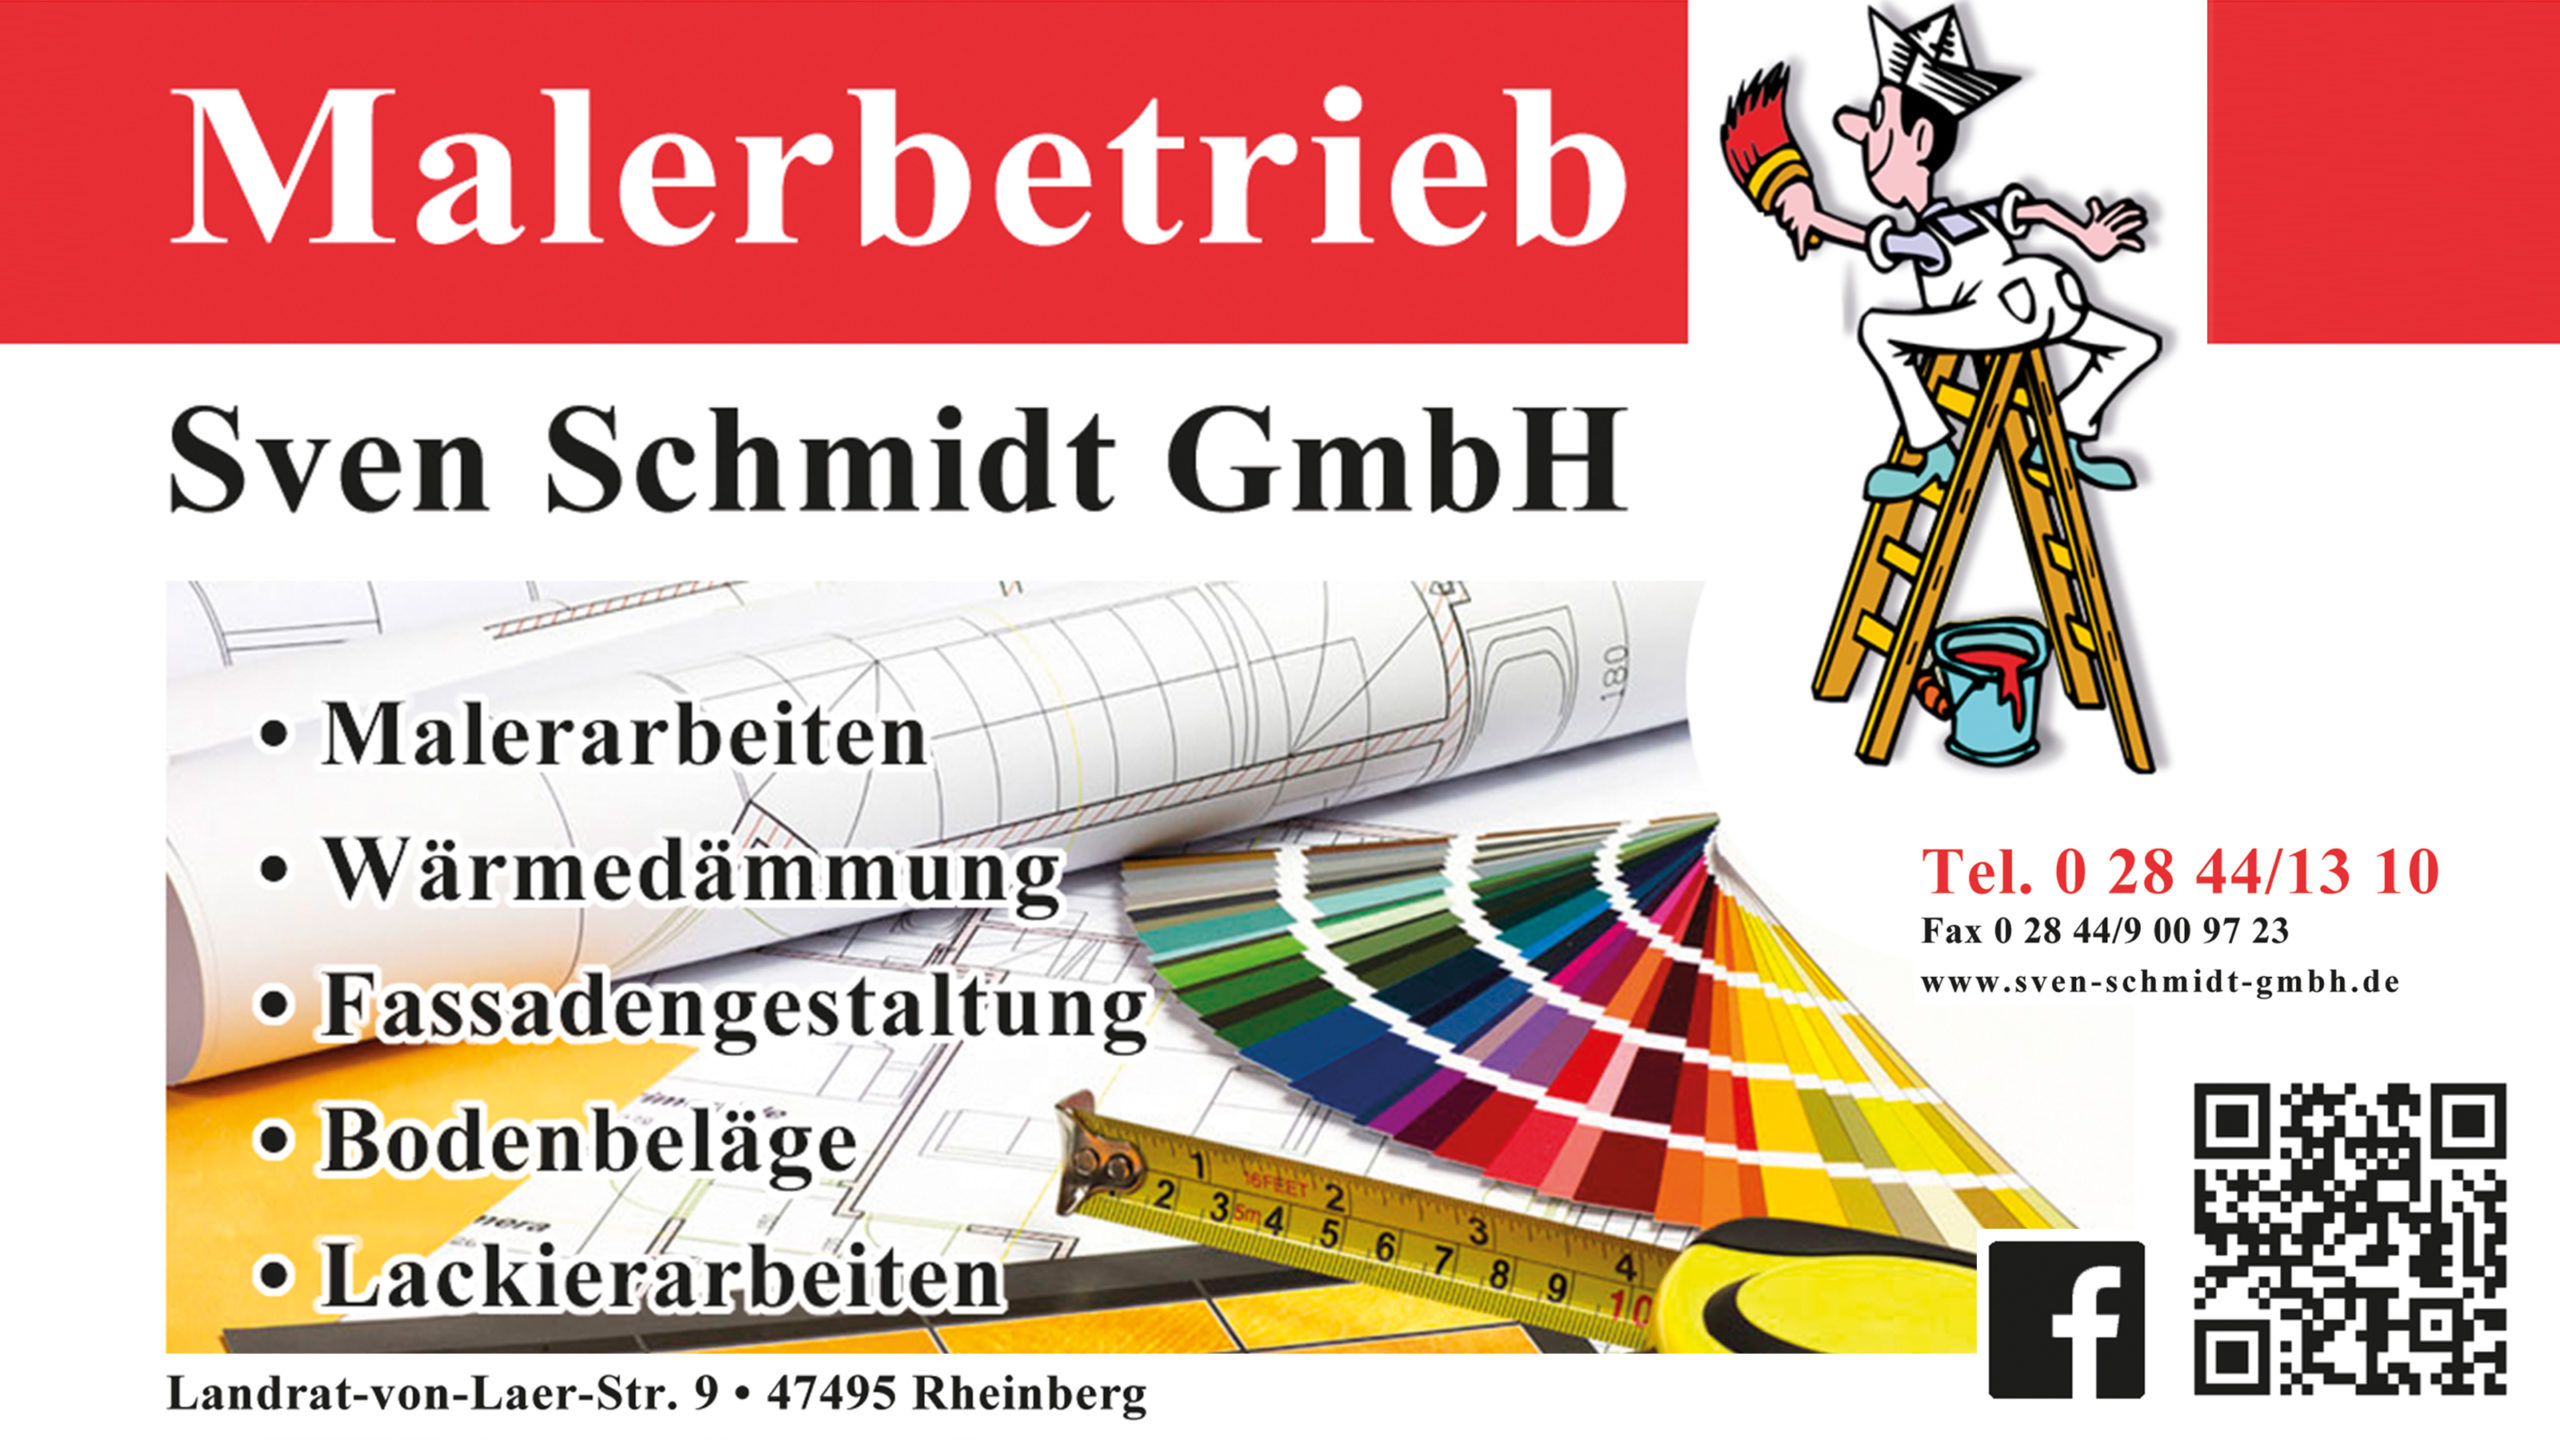 MALERBETRIEB | Sven Schmidt GmbH